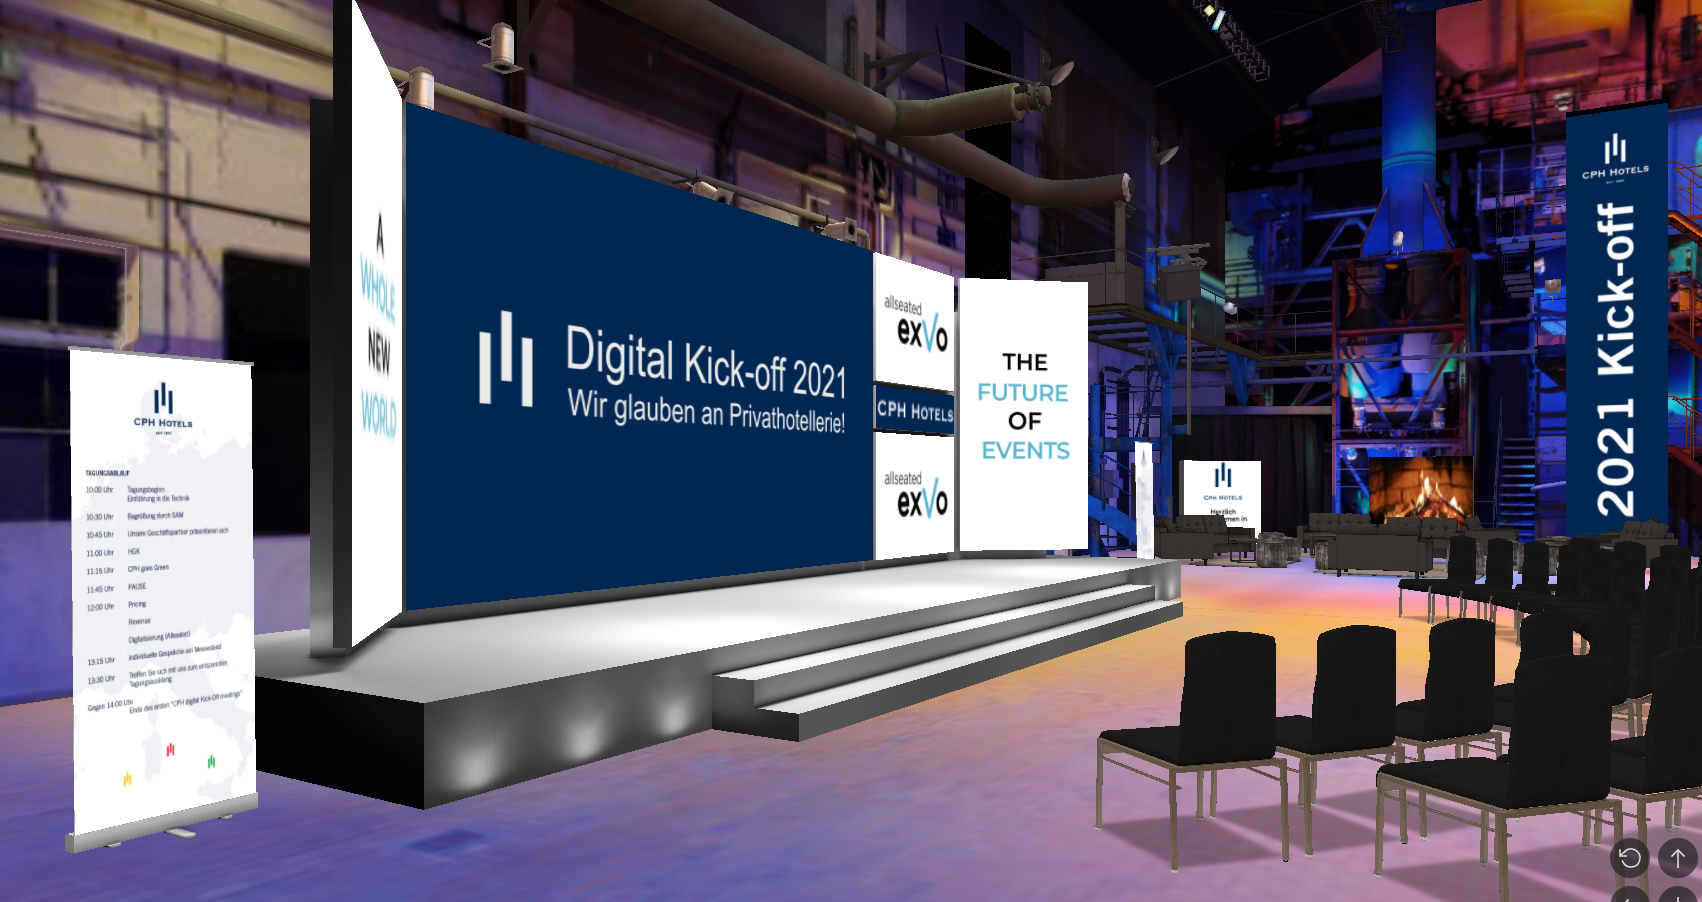 Digitales Kick-off Meeting als Live-Erlebnis: CPH Hotels ging mit großem Programm online